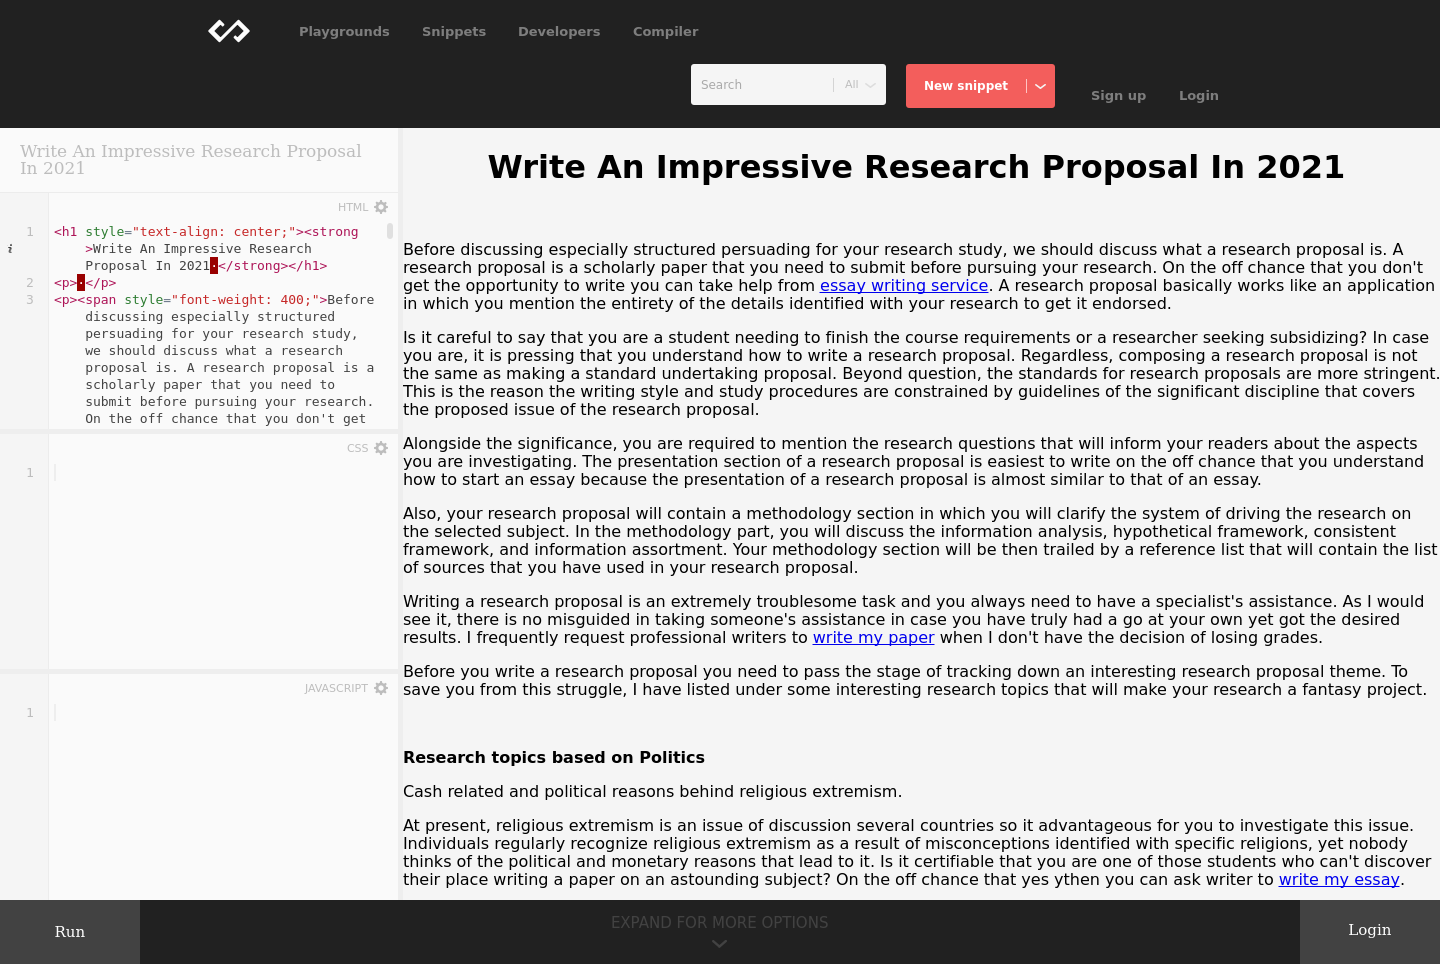 research proposal 2021